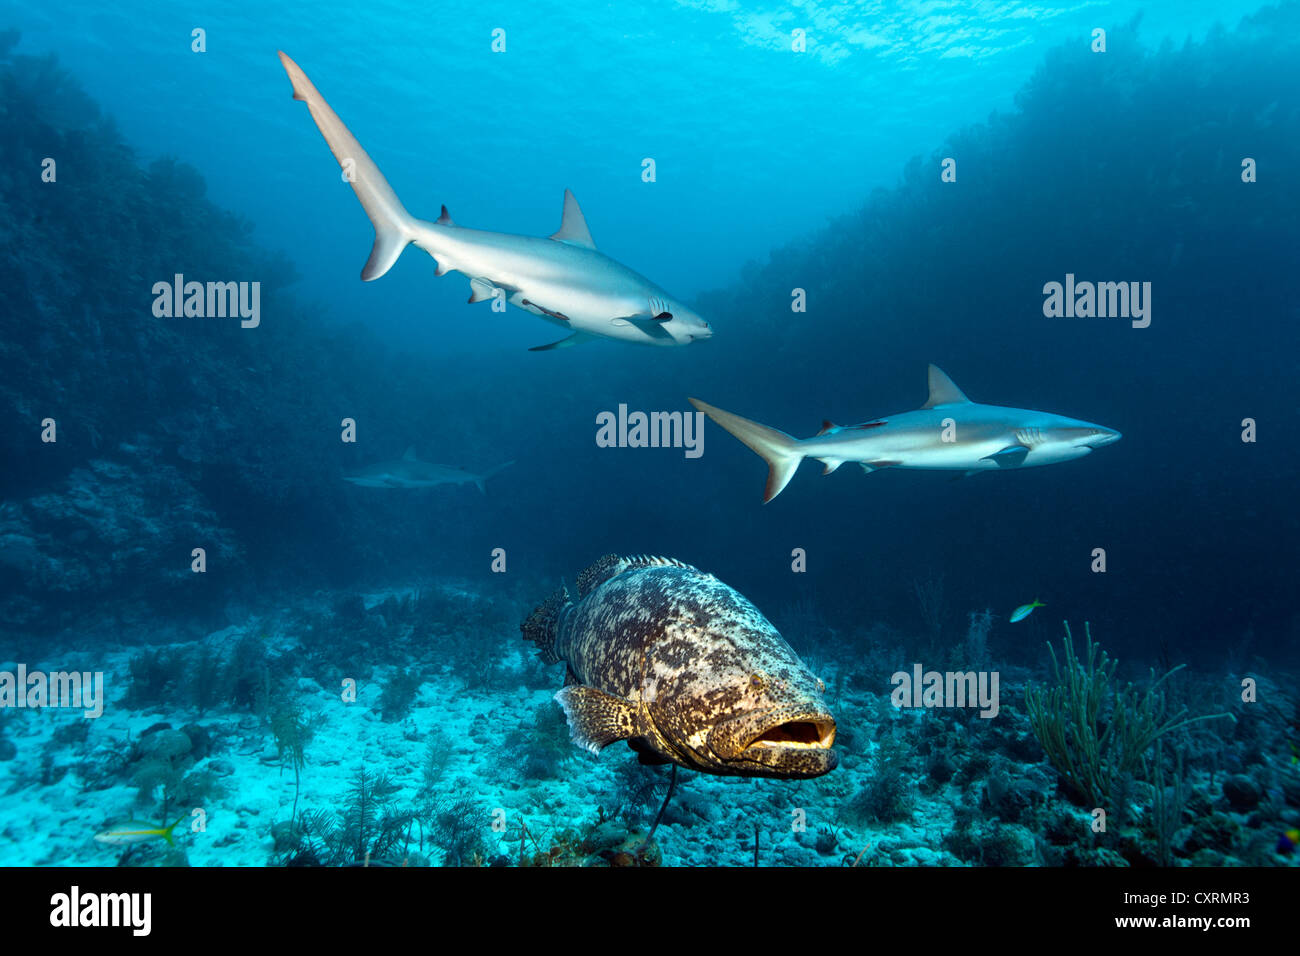 Atlantic goliath grouper fish or itajara or Jewfish (Epinephelus itajara) and Caribbean Reef Sharks (Carcharhinus perezi) Stock Photo